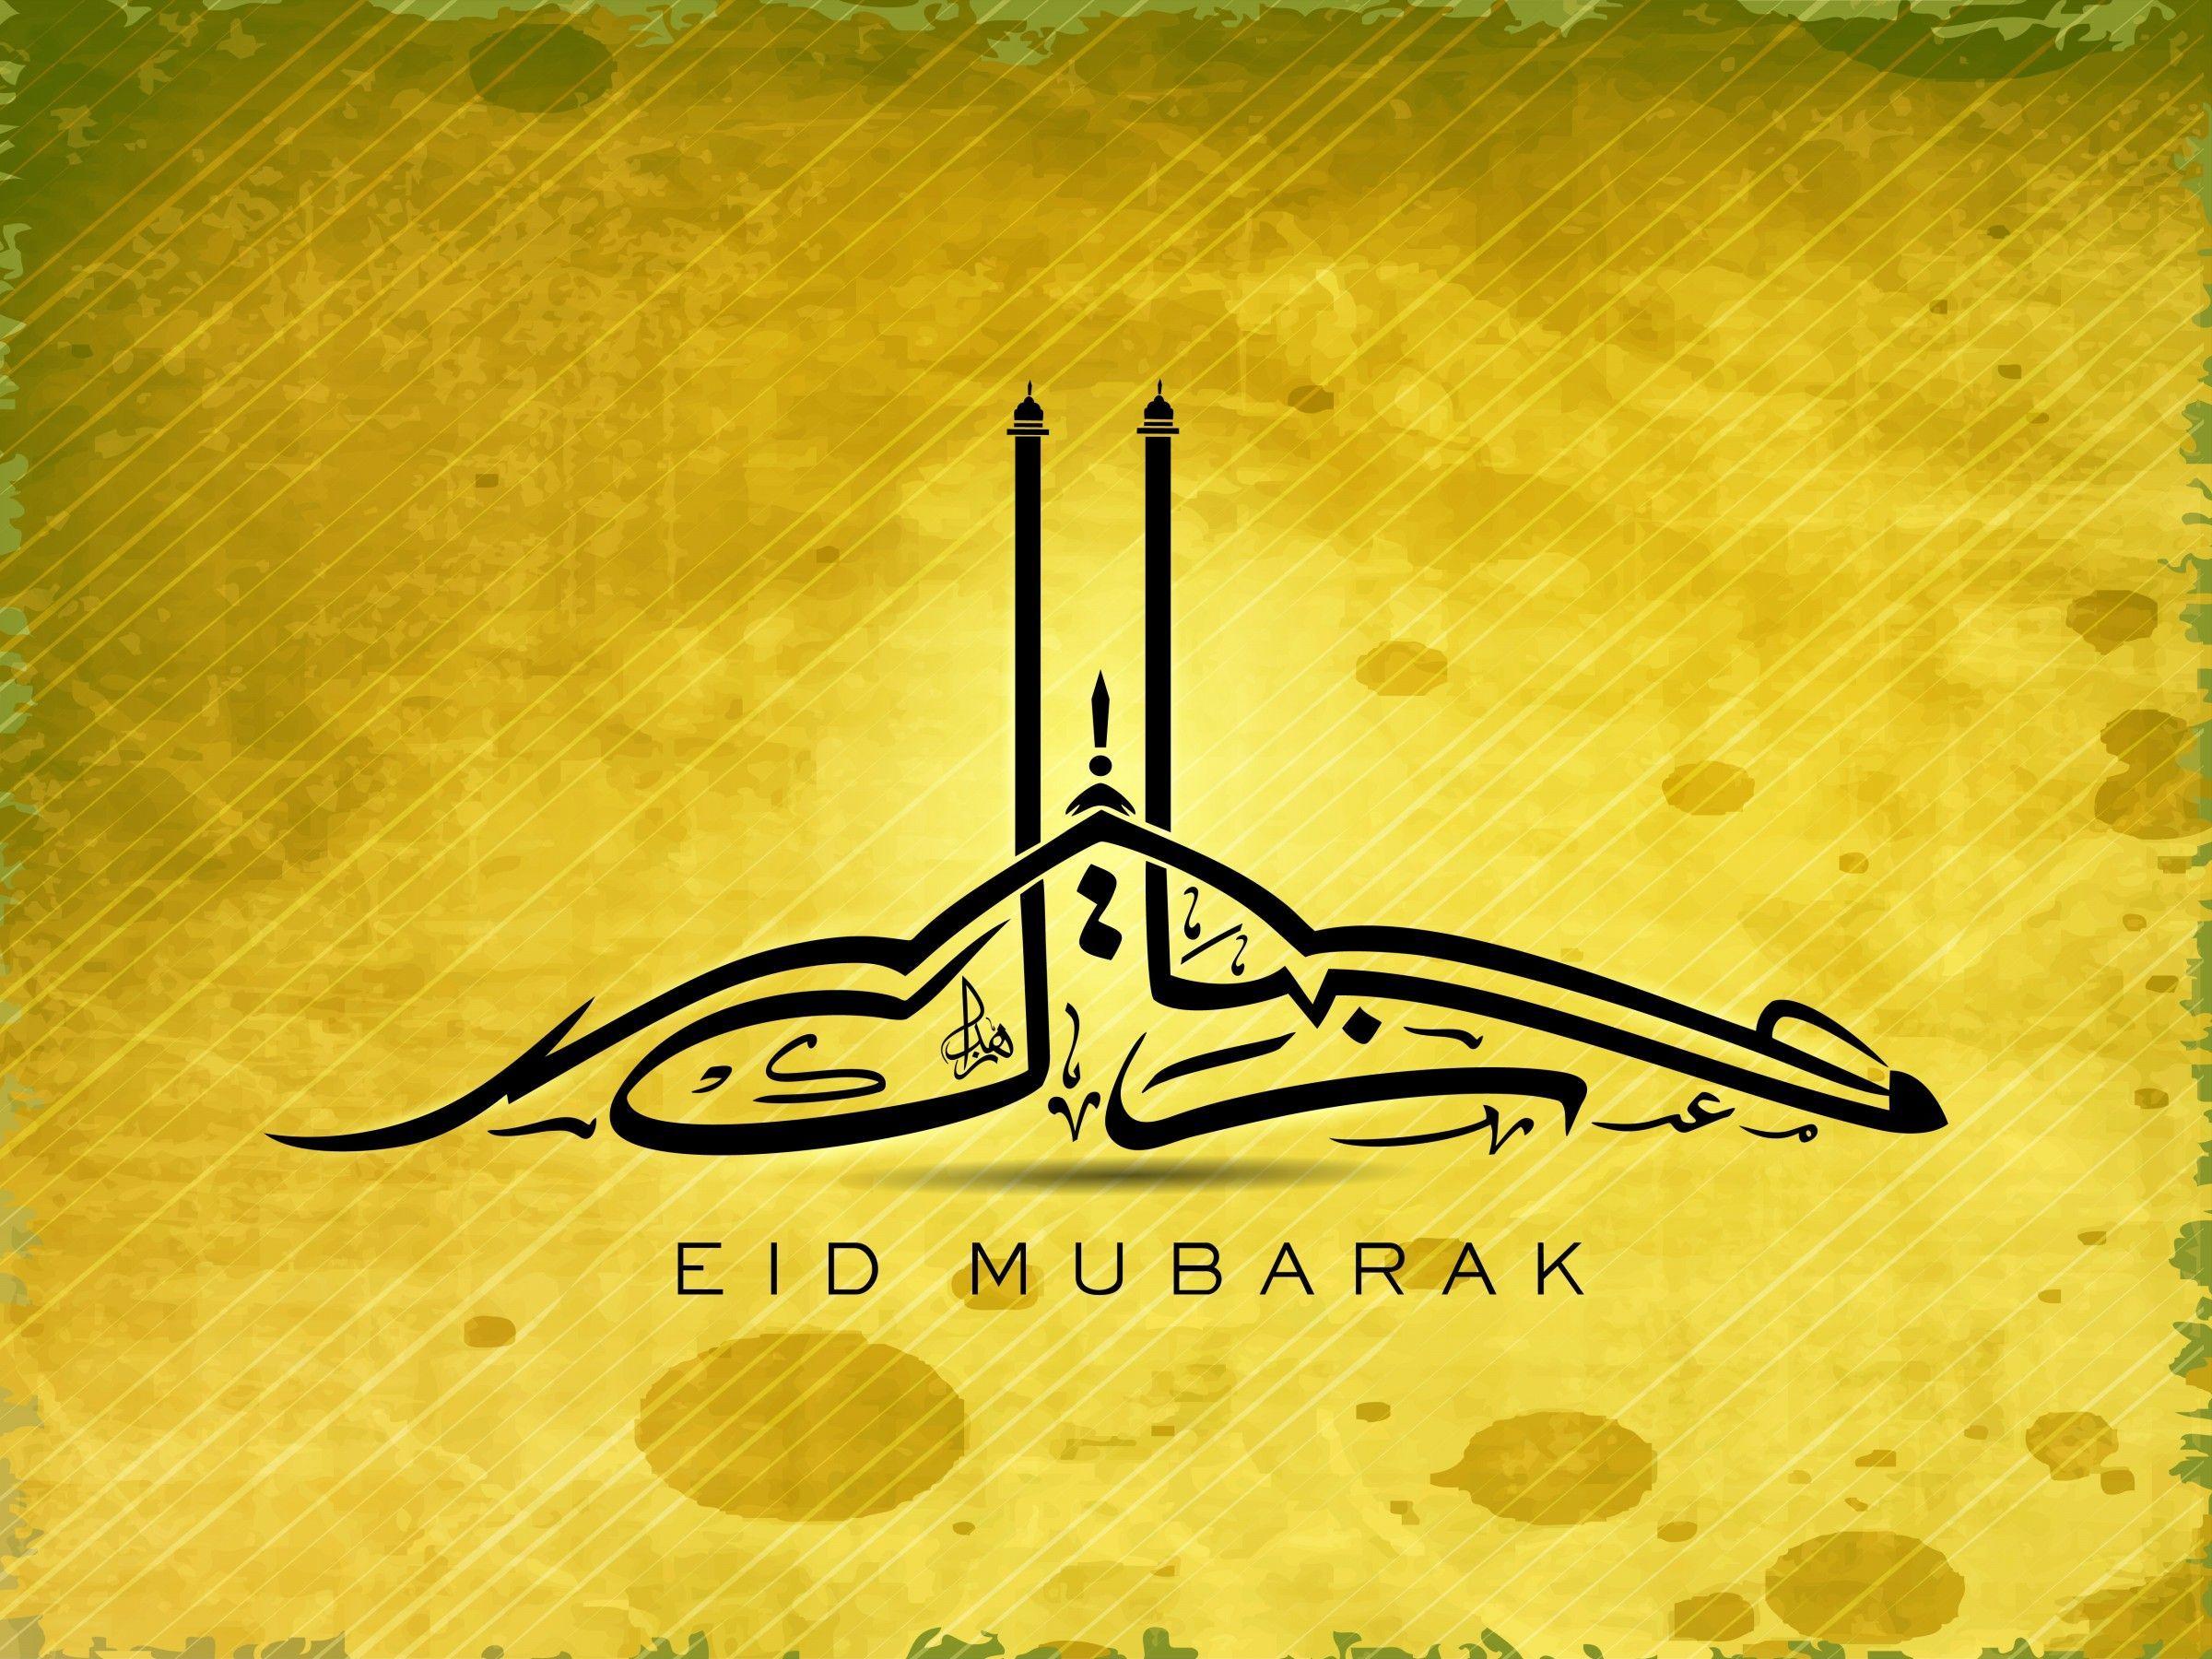 25= Eid Mubarak 2014 Wallpaper, Image, Cards • Elsoar